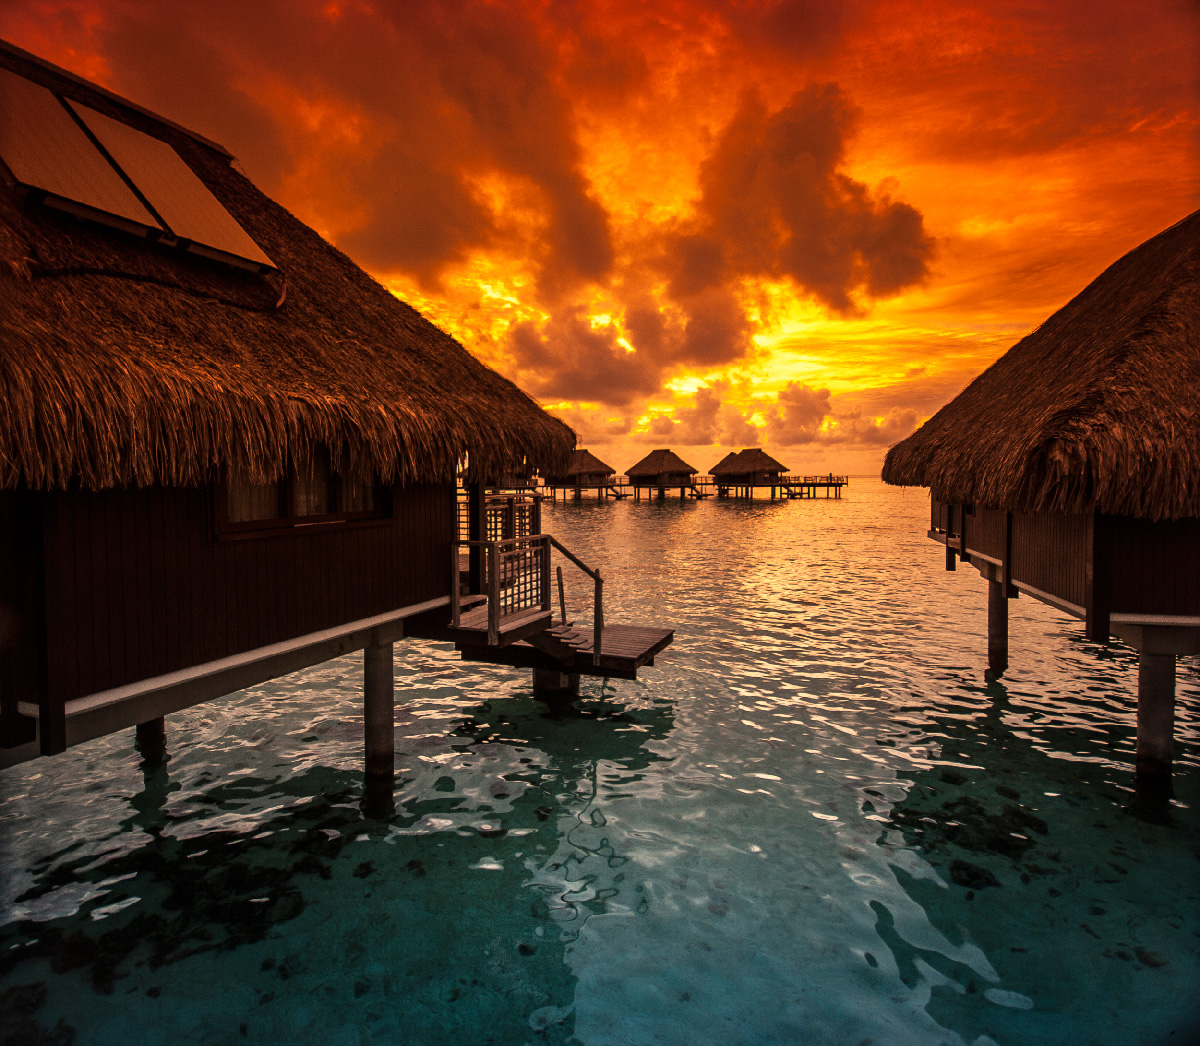 Brilliant sun display from Hilton Moorea, Tahiti